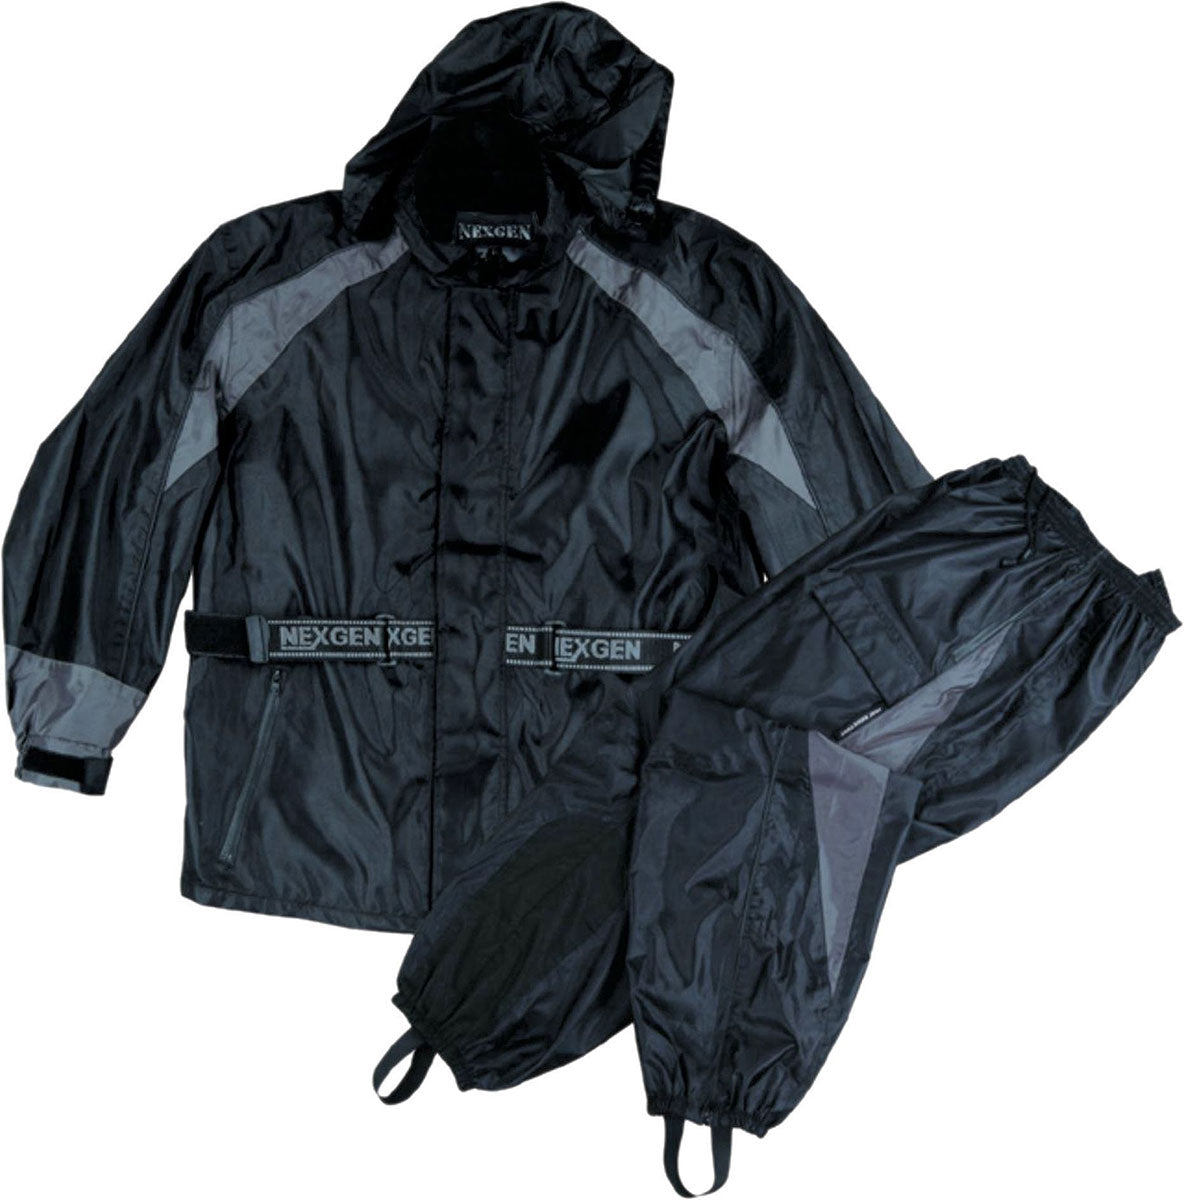 NexGen Men's SH2050 Black and Grey Hooded Water Proof Armored Rain Sui ...